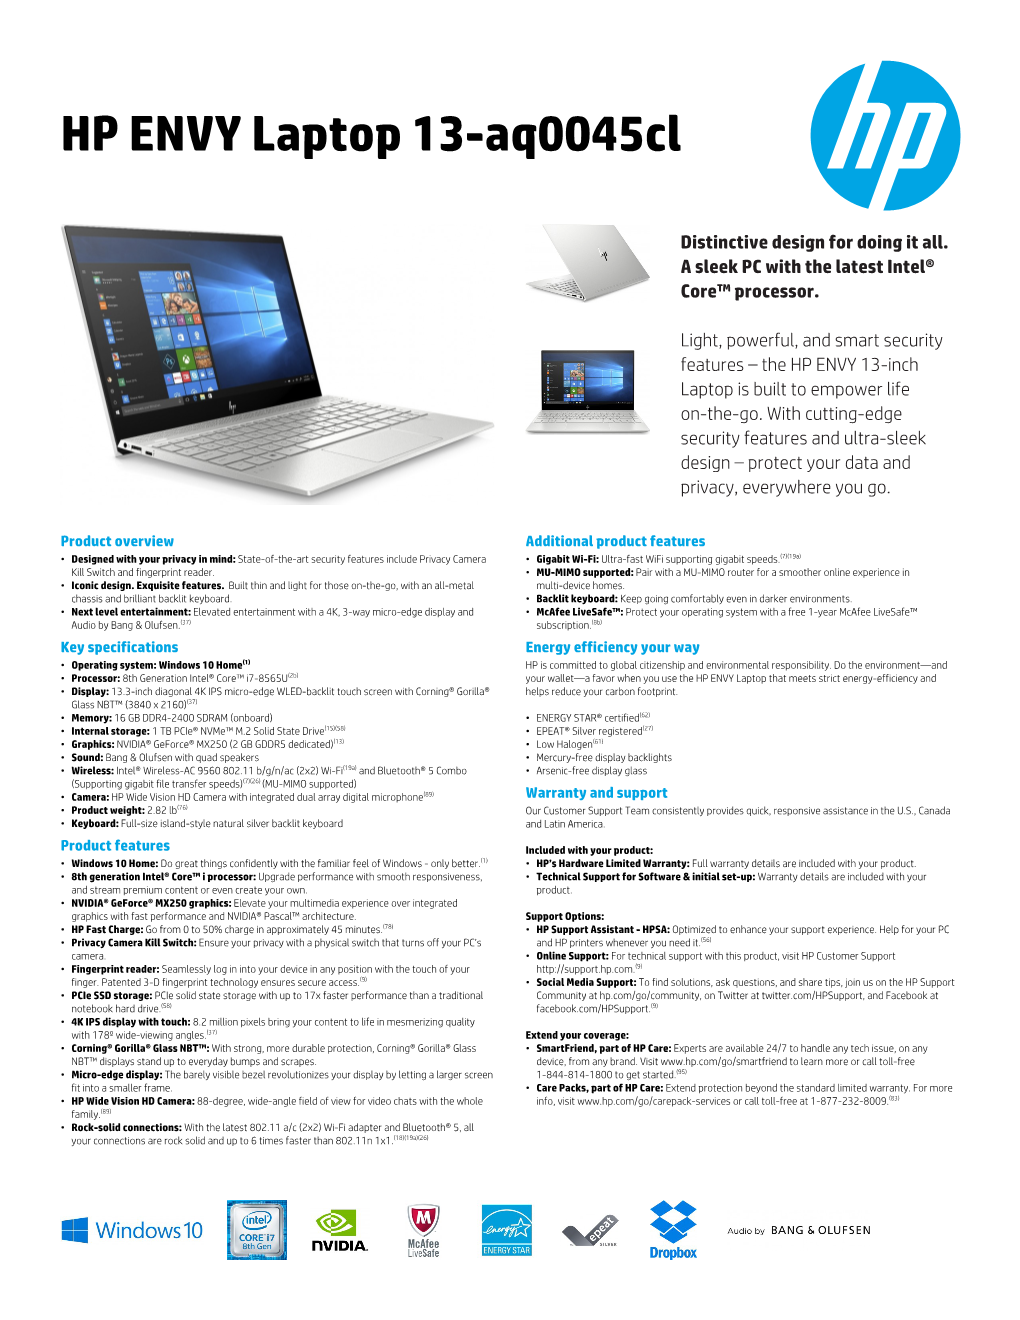 HP ENVY Laptop 13-Aq0045cl